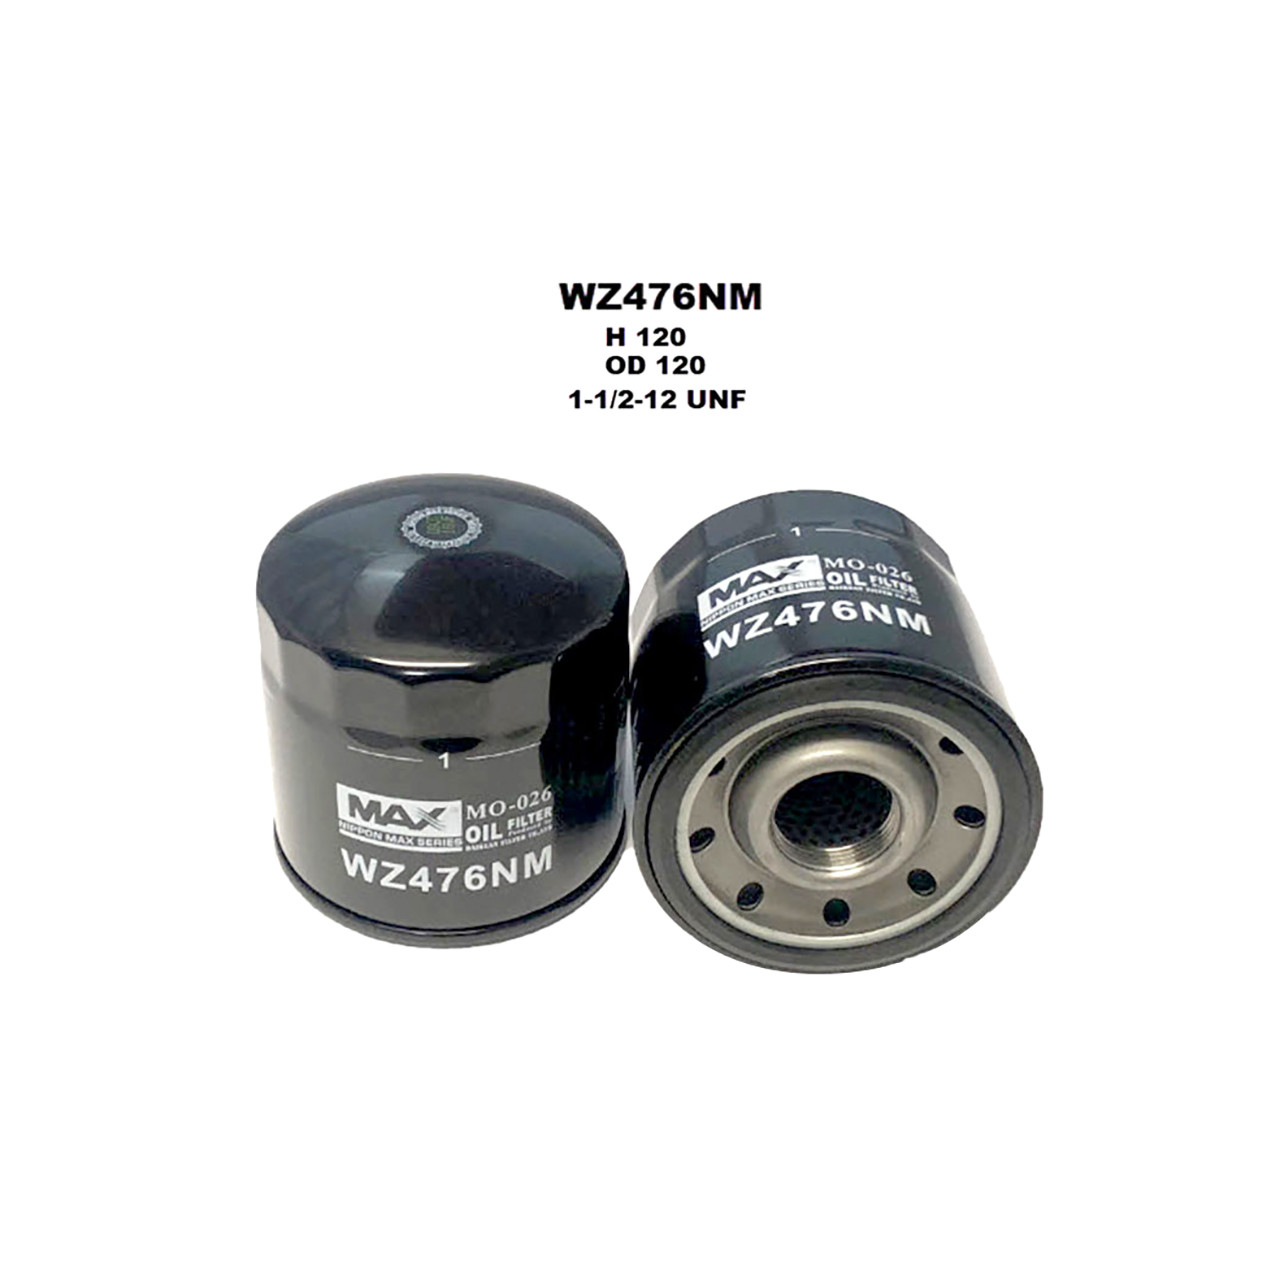 WZ476NM Wesfil Cooper Oil Filter for Z476/Z767 Isuzu (Cross Ref